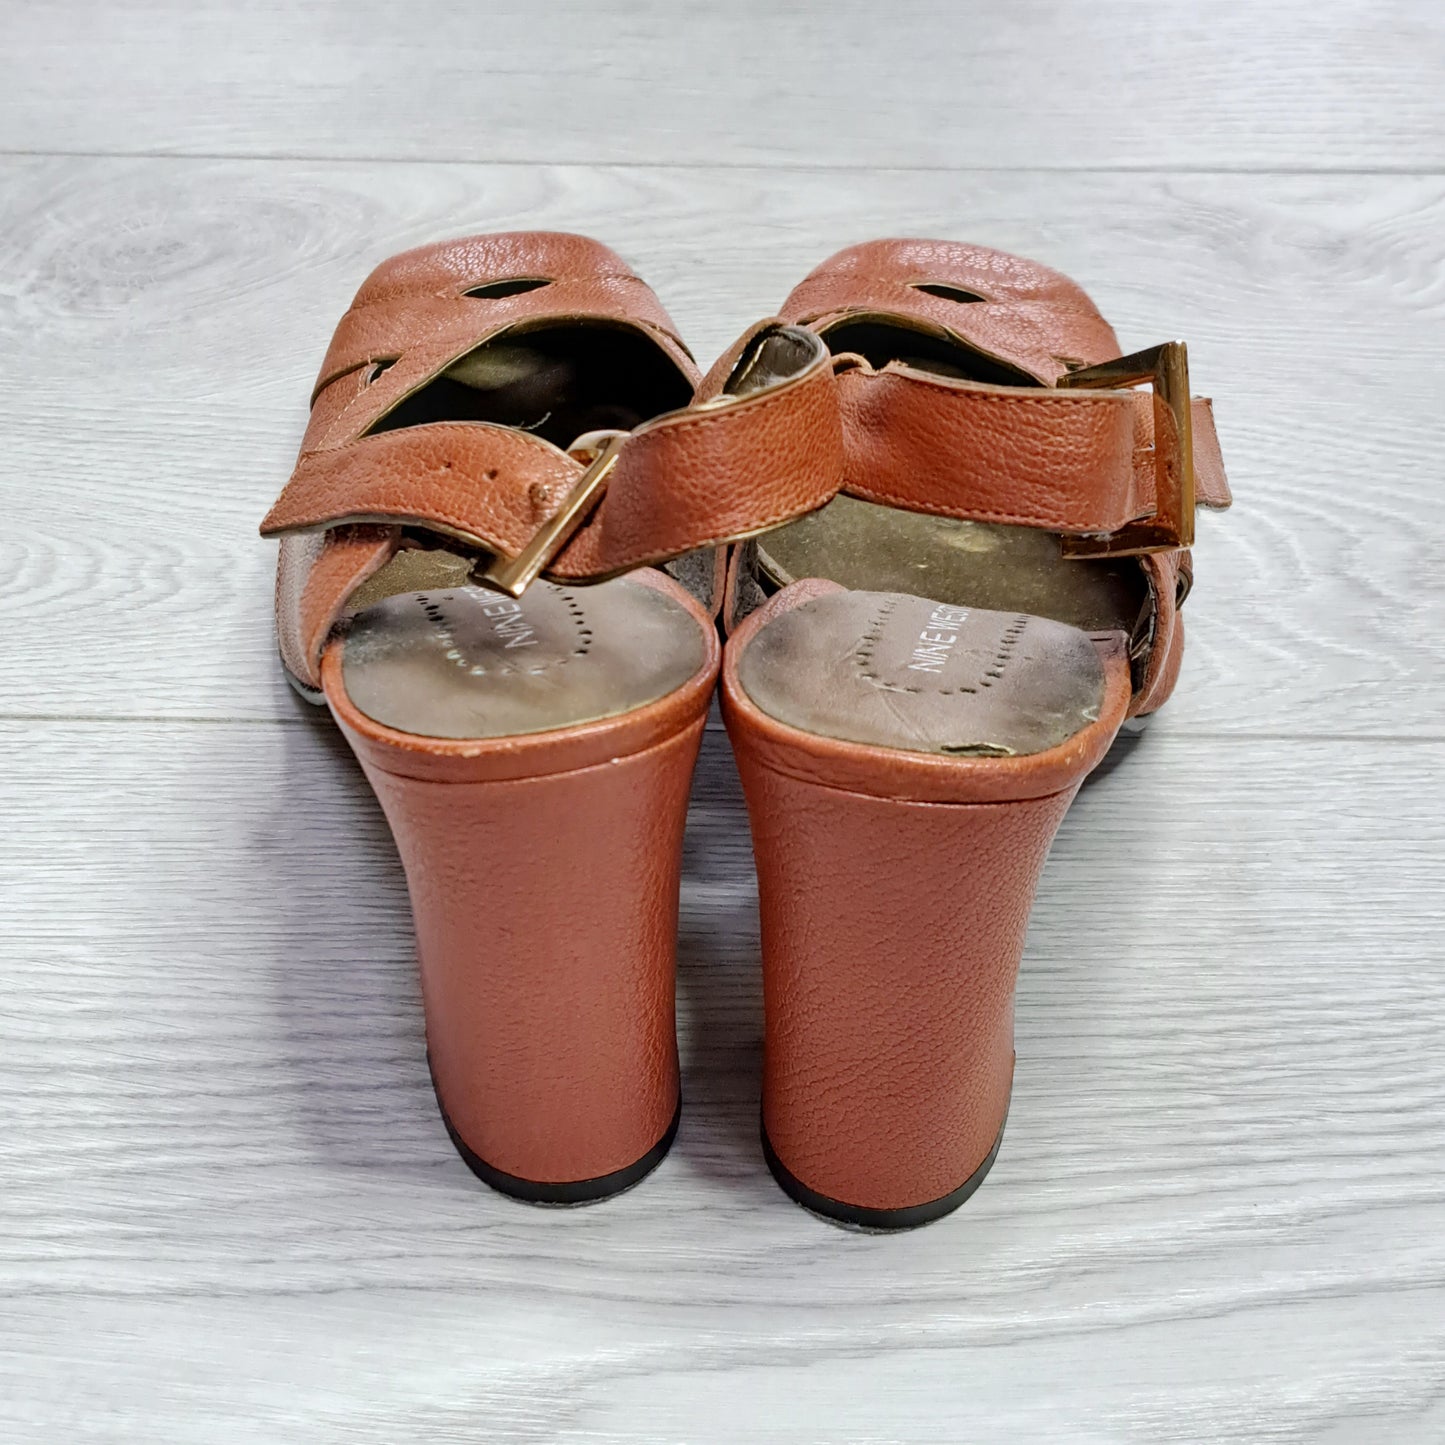 Nine West terracotta leather block heels, size 9M, good condition